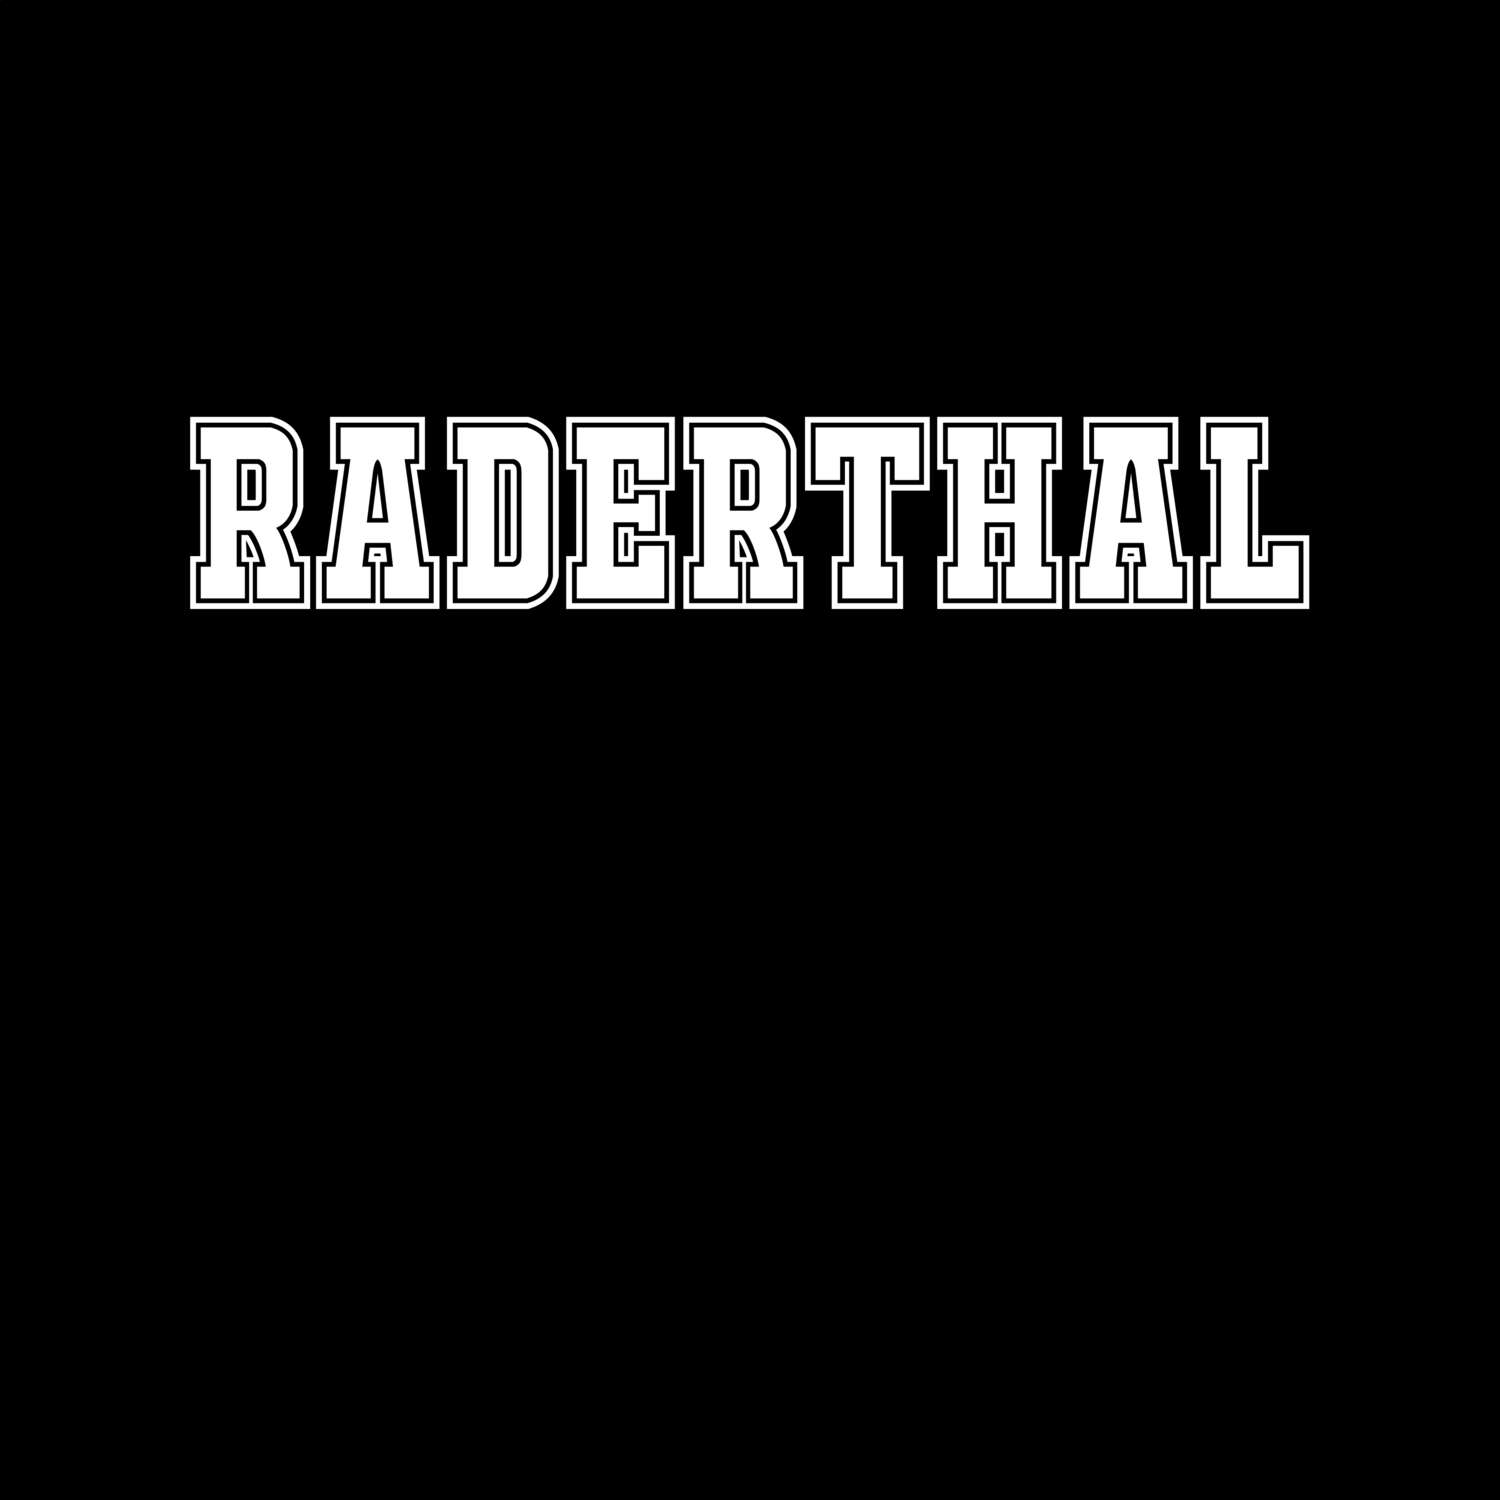 Raderthal T-Shirt »Classic«